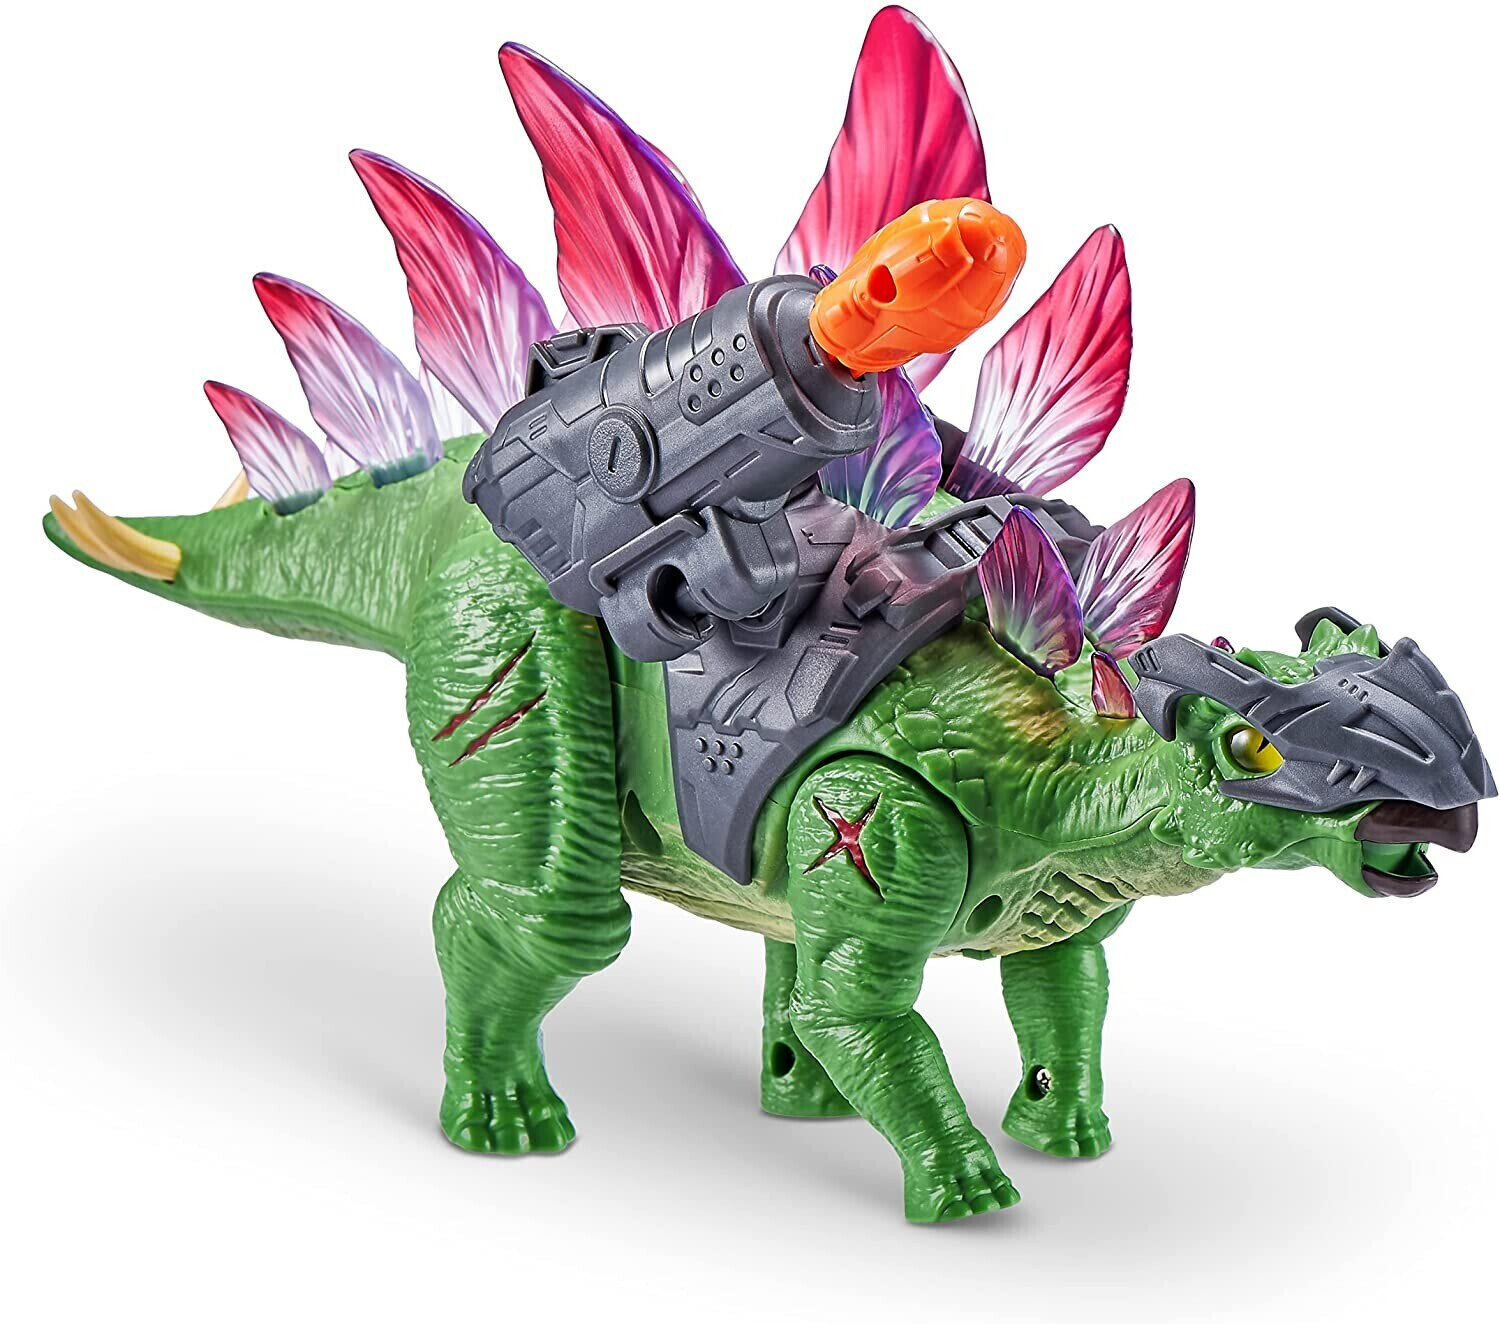 Robot Zuru Dino Wars T-Rex - Robot éducatif - Achat & prix